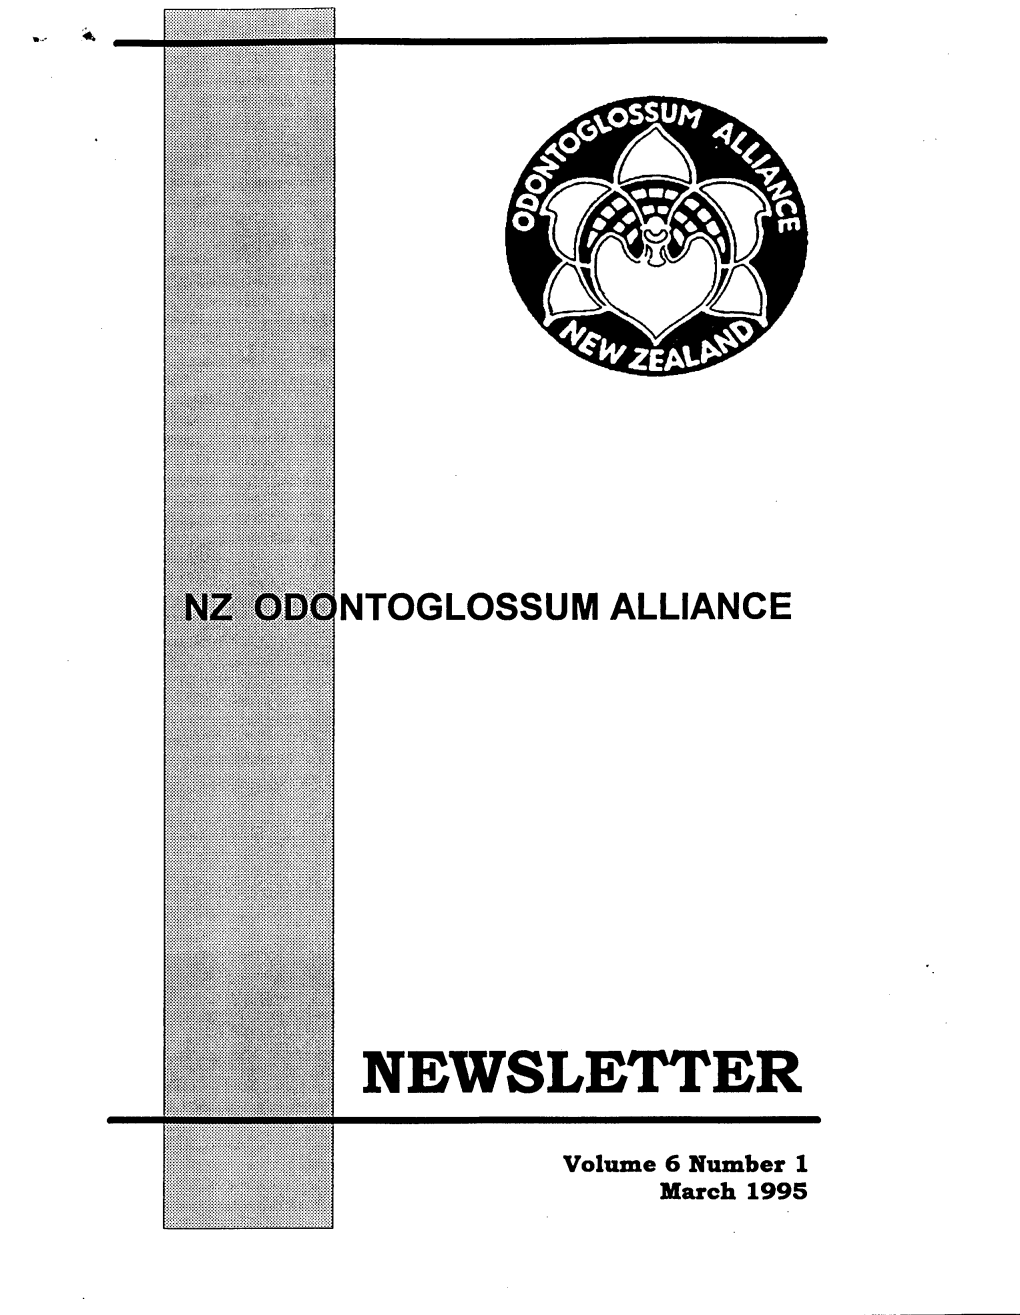 March 1995 Newsletter